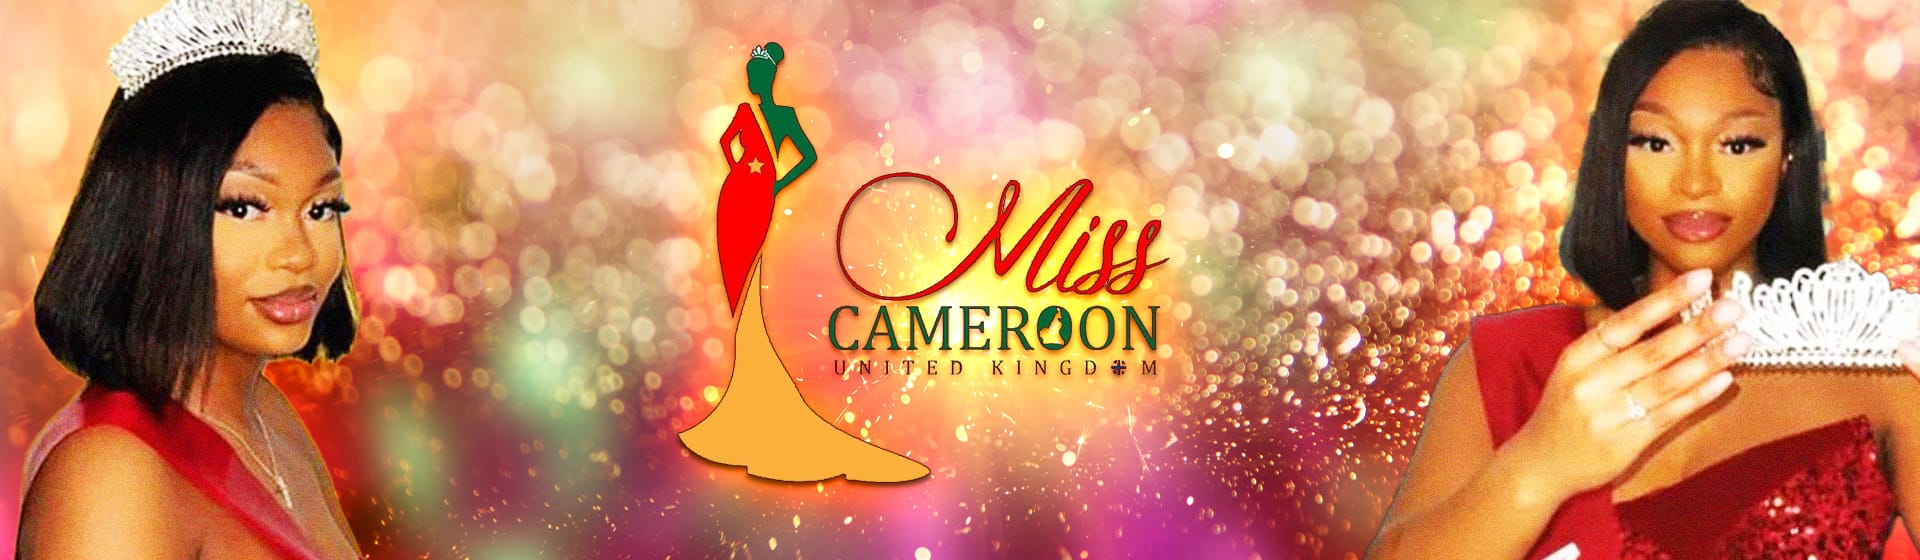 Miss Cameroon UK songs and videos - CEEK.com